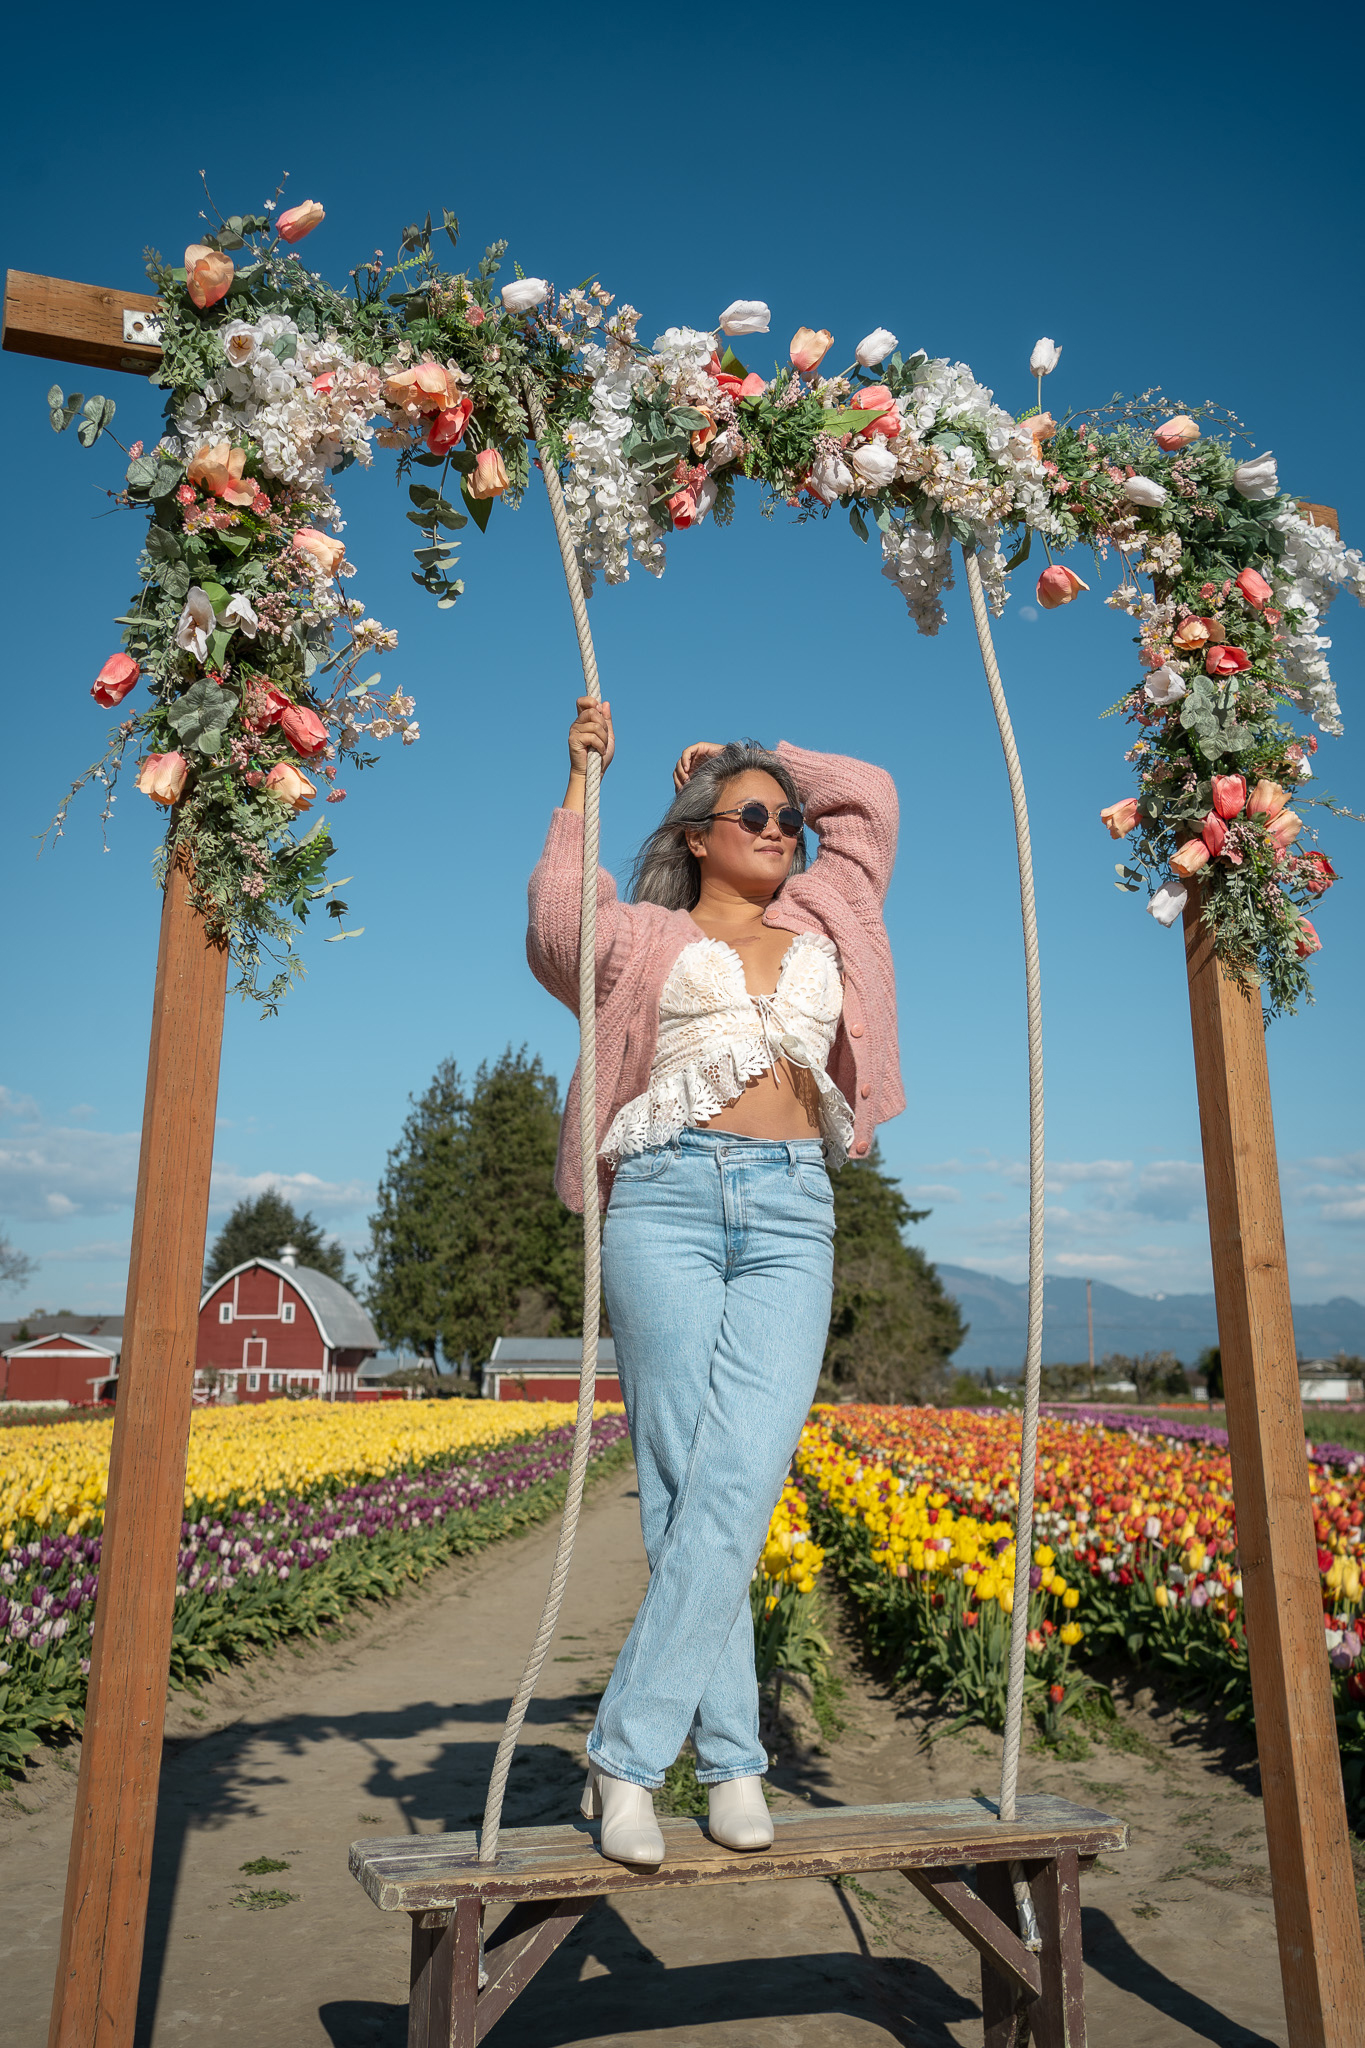 nbd revolve lace top sezane pink sweater abercrombie jeans tulip town flower swing